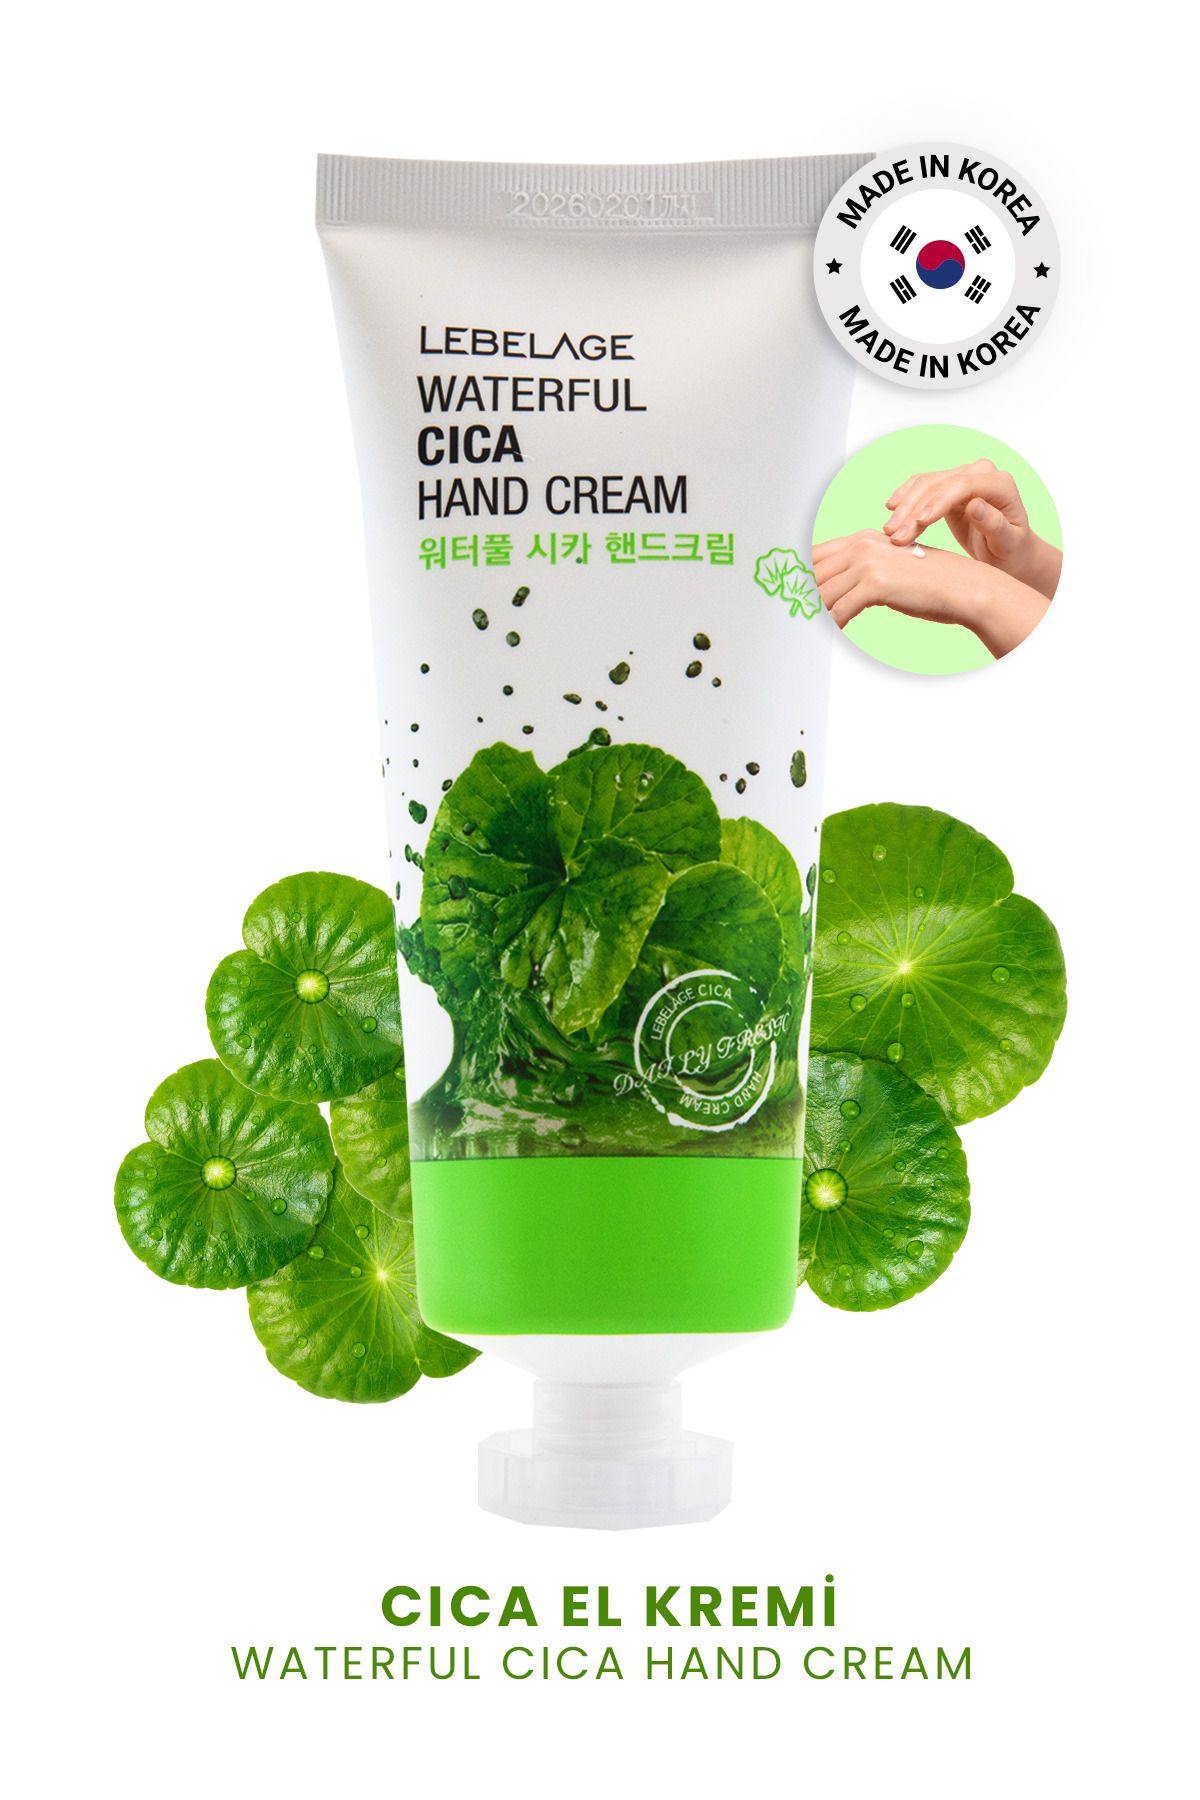 LEBELAGE Centella Asiatica El Kremi Lebelage Waterful Cica Hand Cream 100 ml Büyük Boy